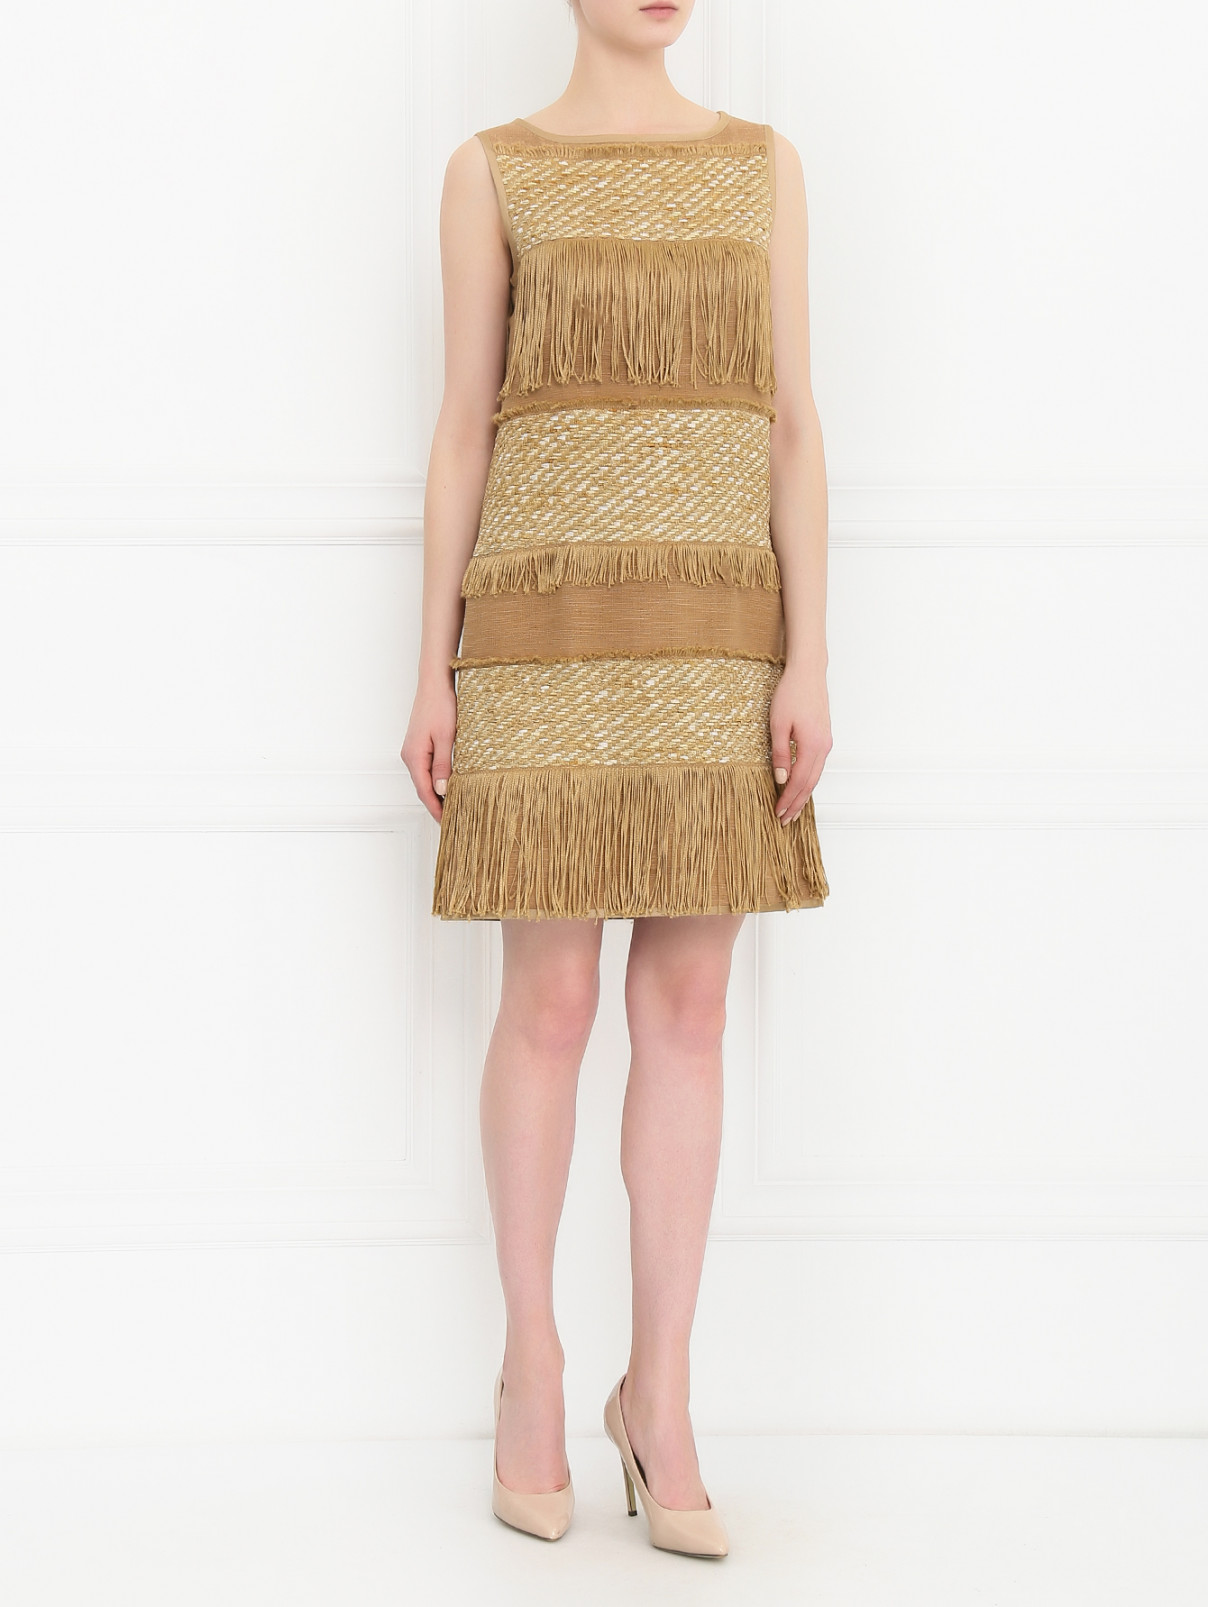 Платье-мини с бахромой Alberta Ferretti  –  Модель Общий вид  – Цвет:  Коричневый